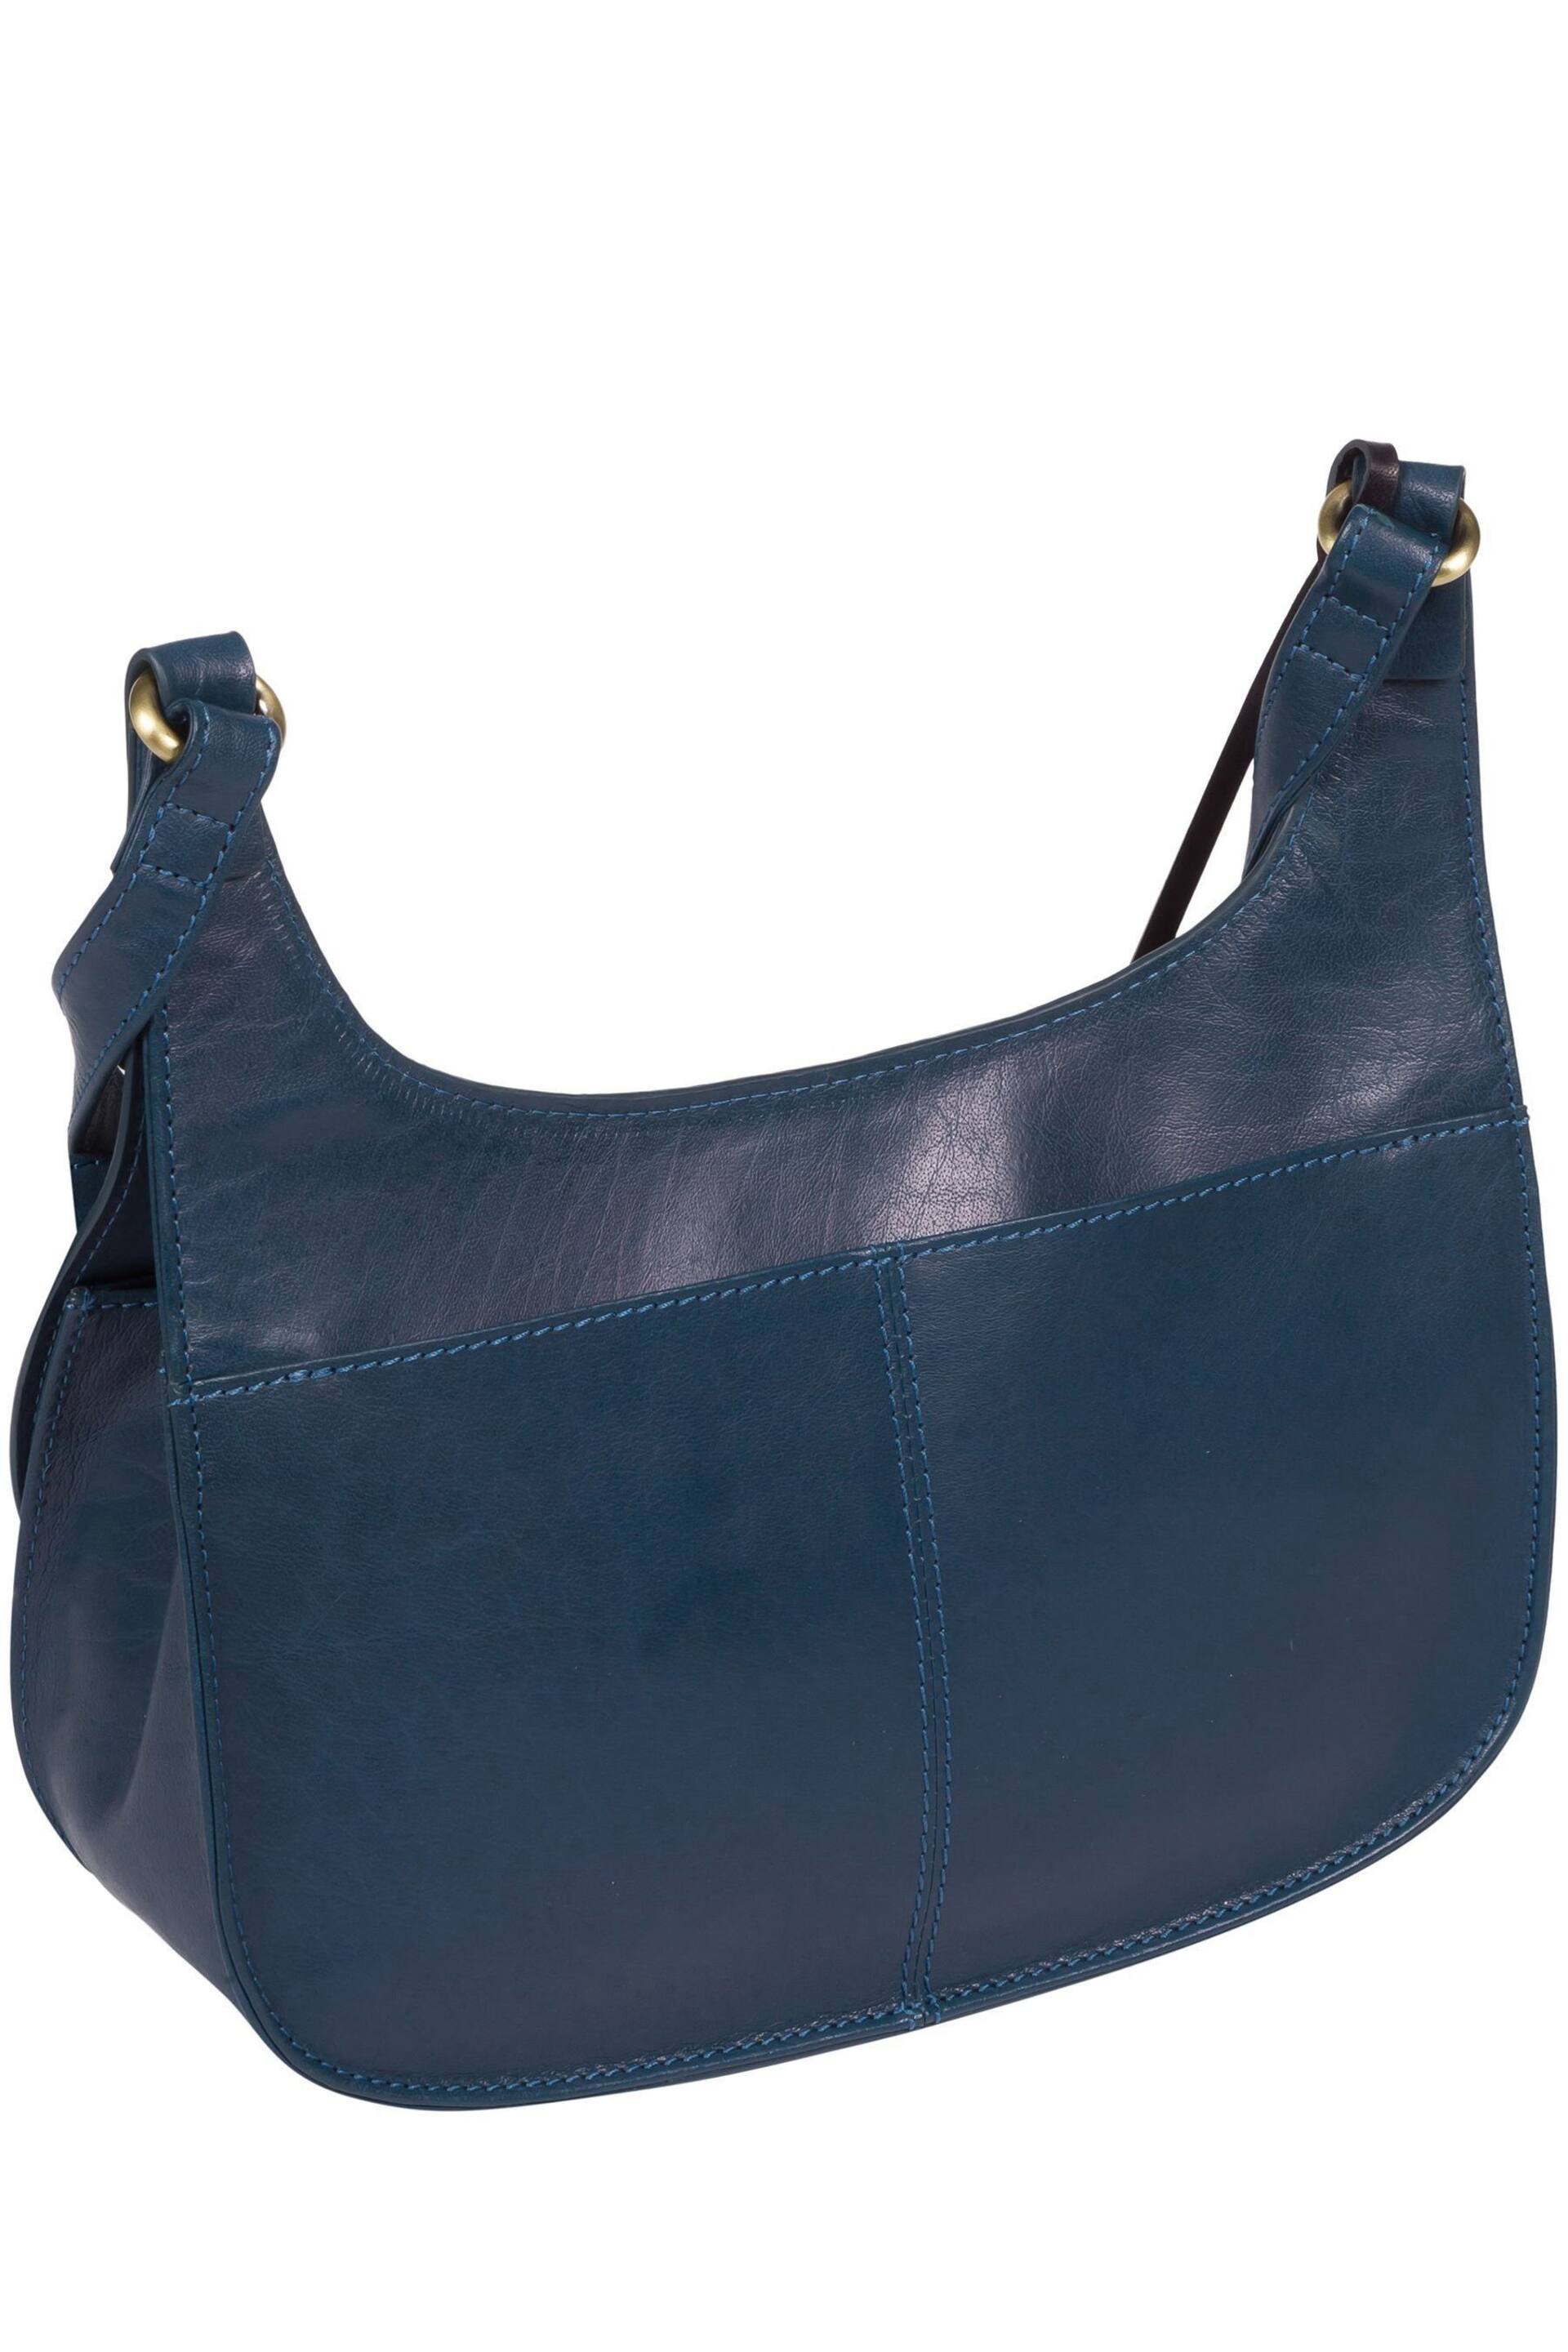 Conkca Ellipse Leather Cross-Body Bag - Image 2 of 6